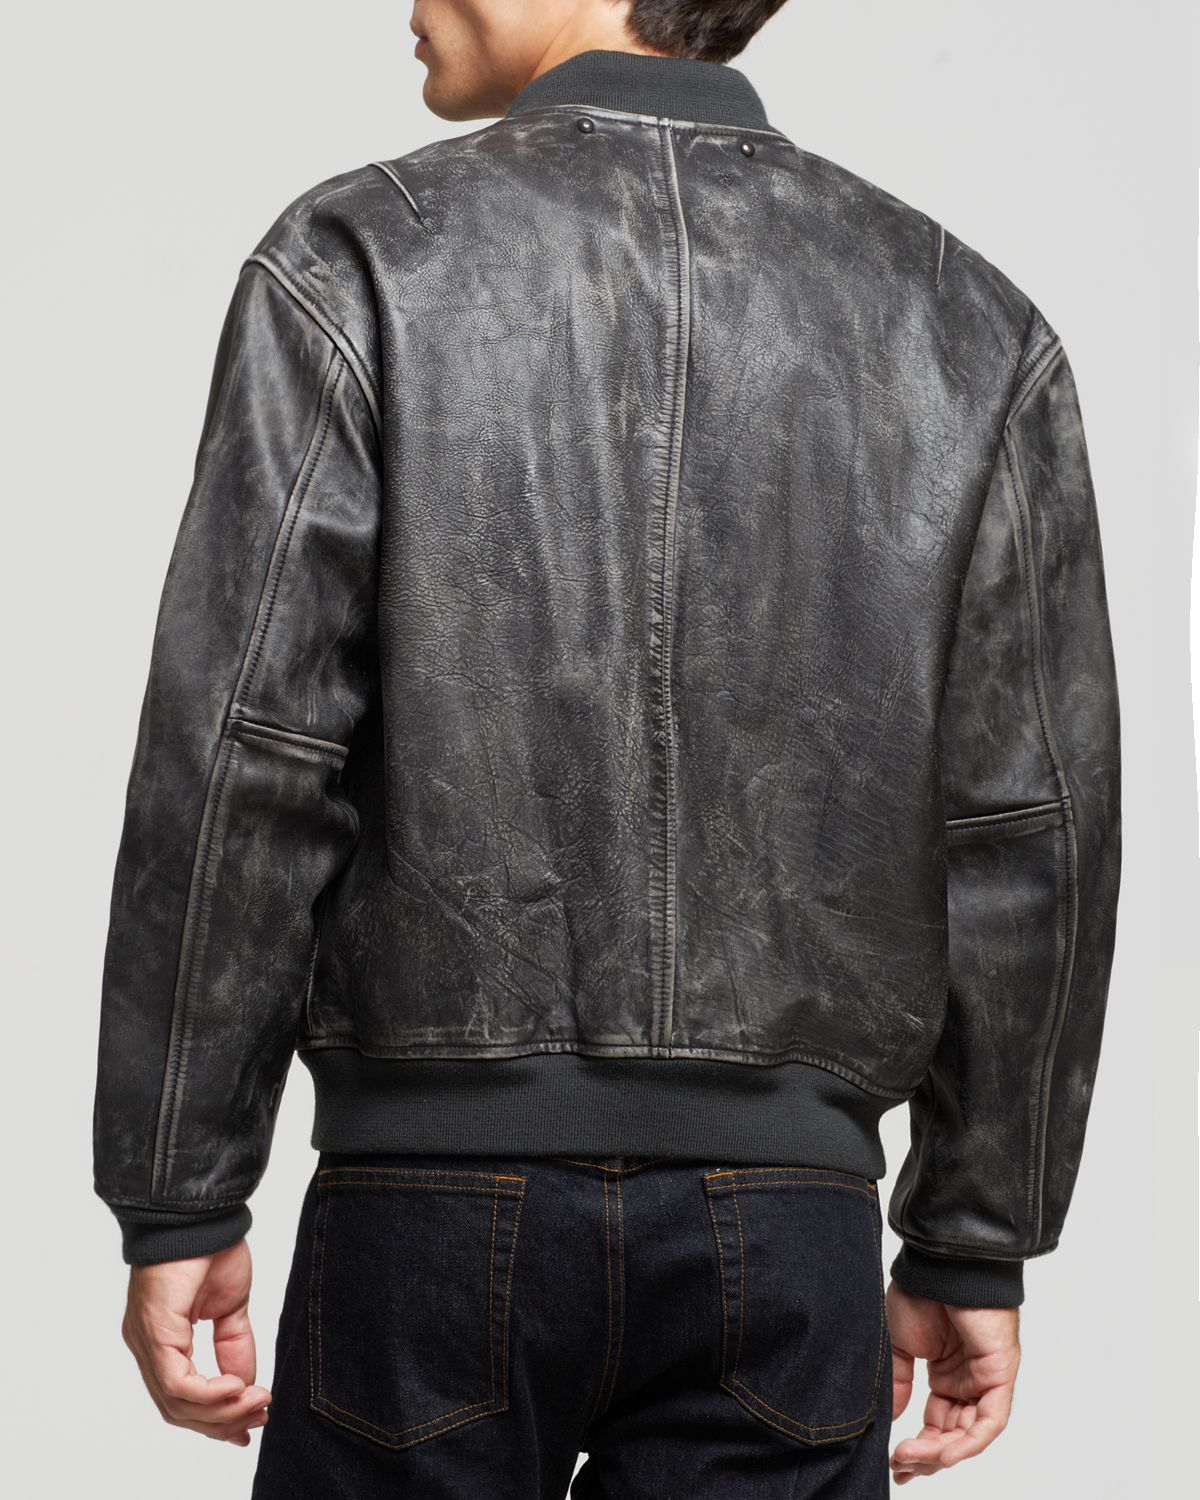 Lyst - Marc By Marc Jacobs Trevor Leather Jacket in Black for Men